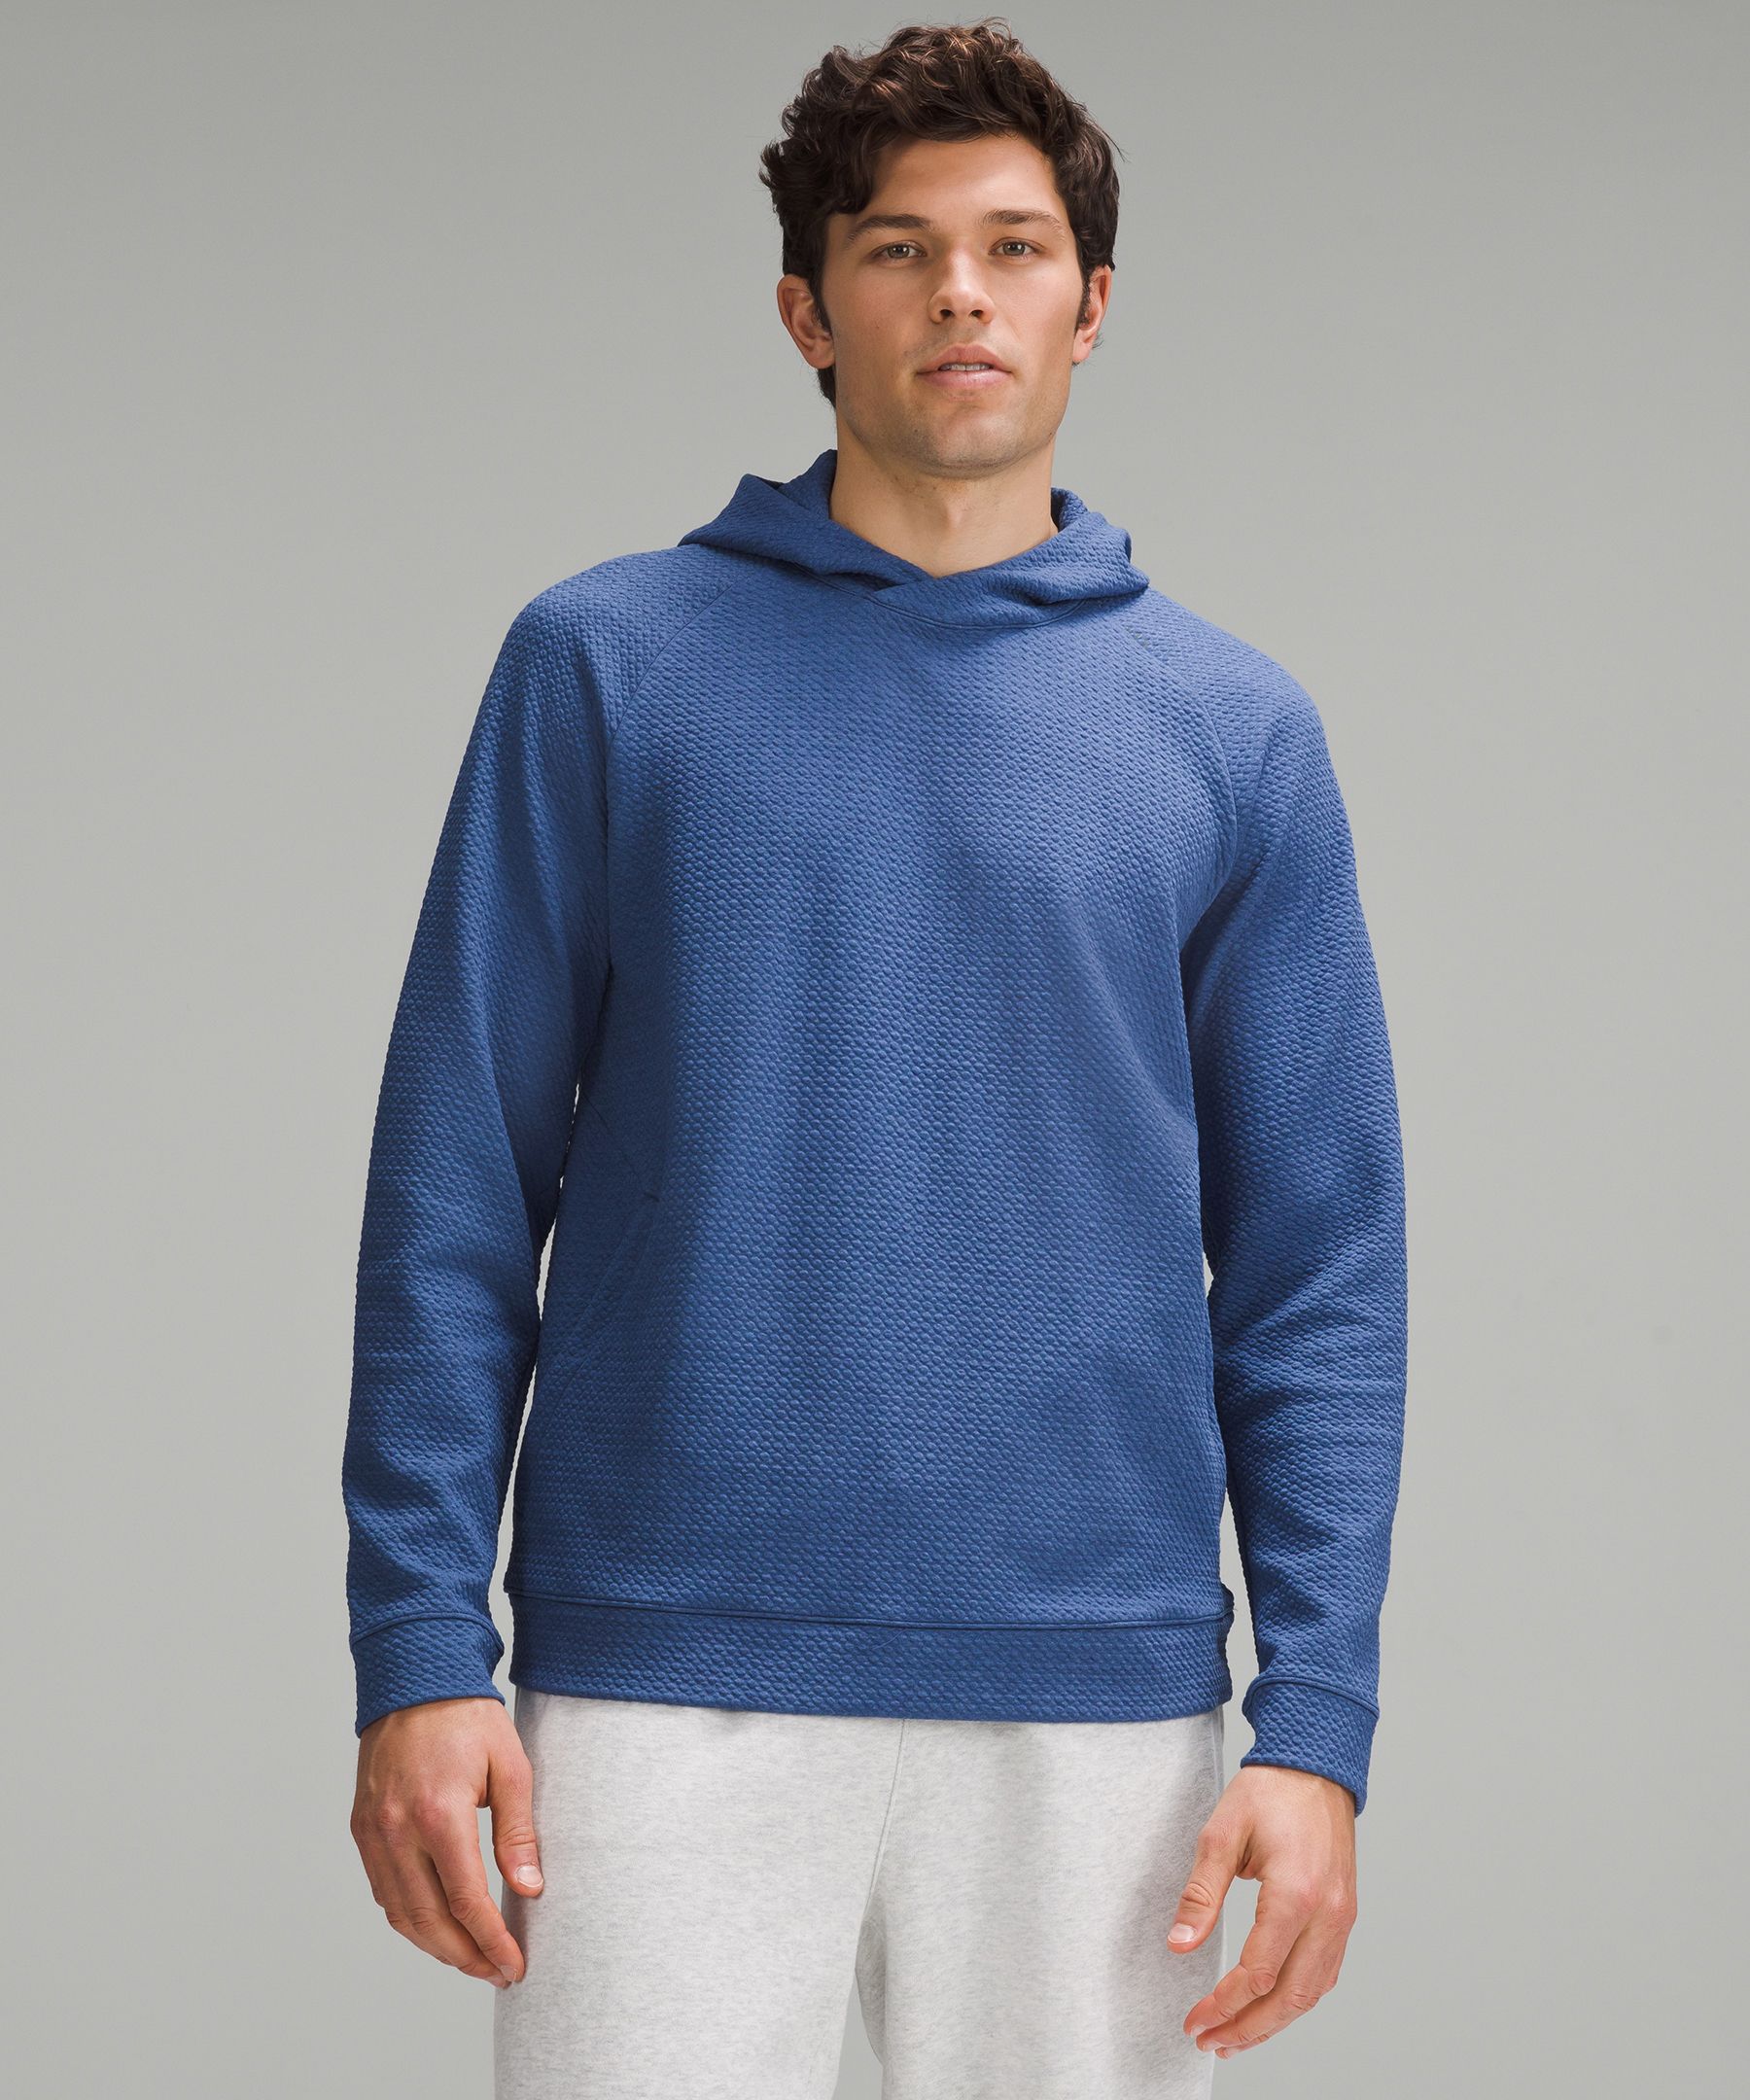 Lululemon Blue Hoodie Sweatshirt Size Large